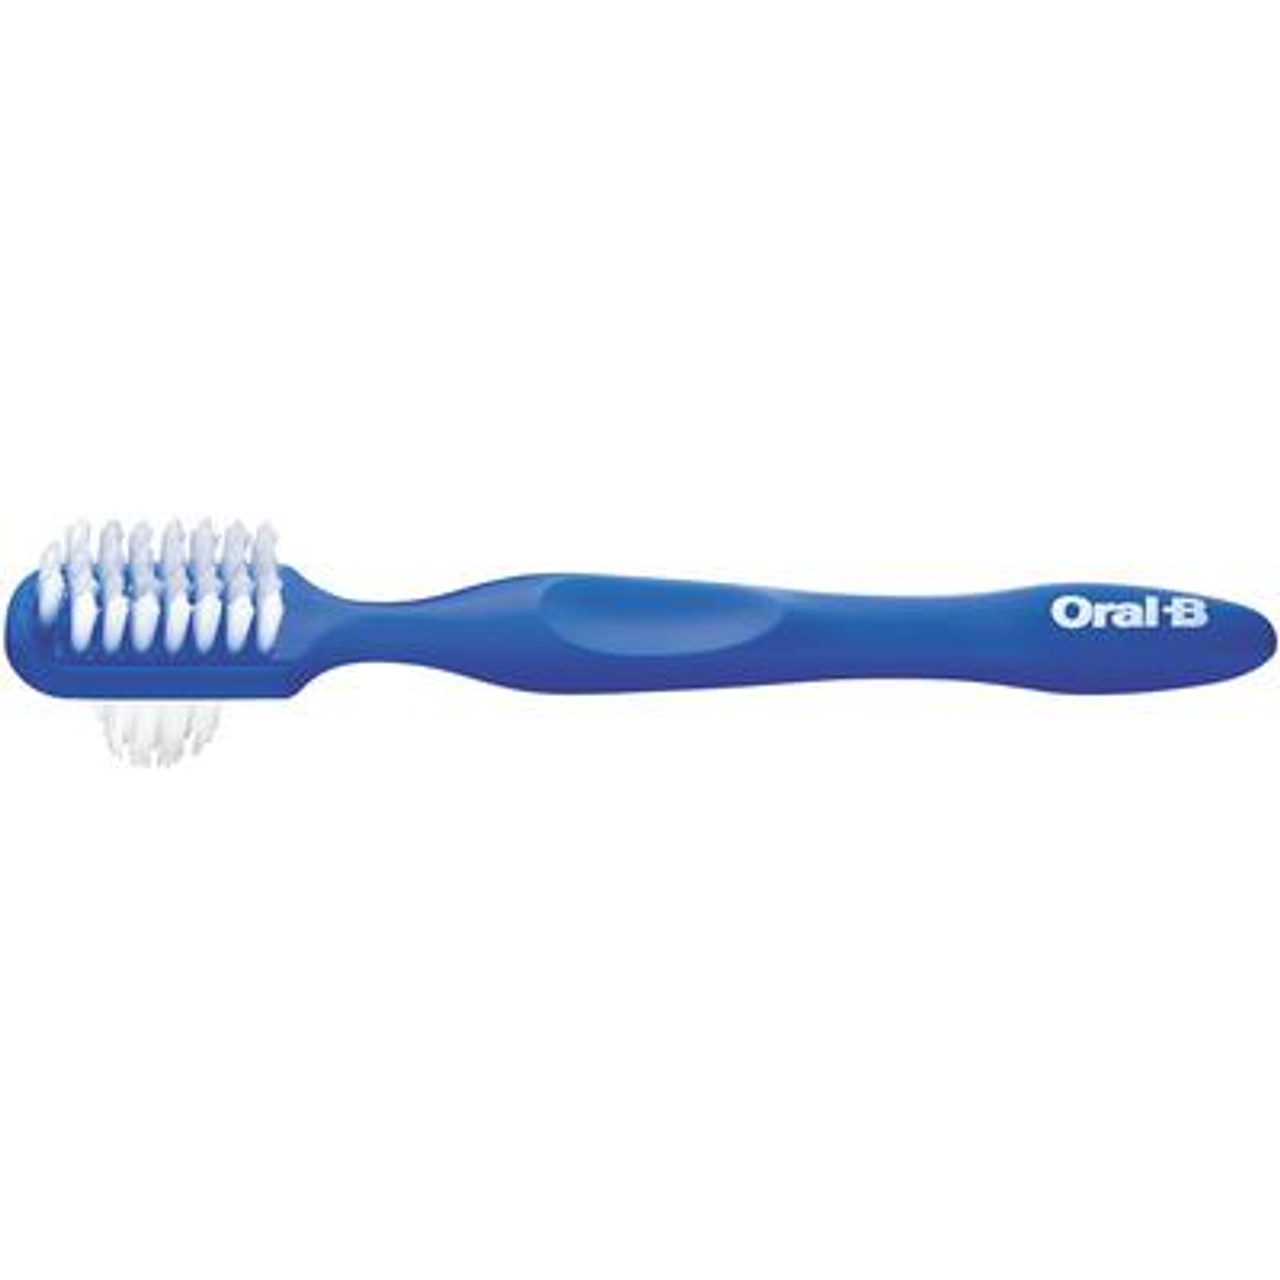 P&G Oral-B Denture Brush 6/bx (old part #s 80310199, 75048450)